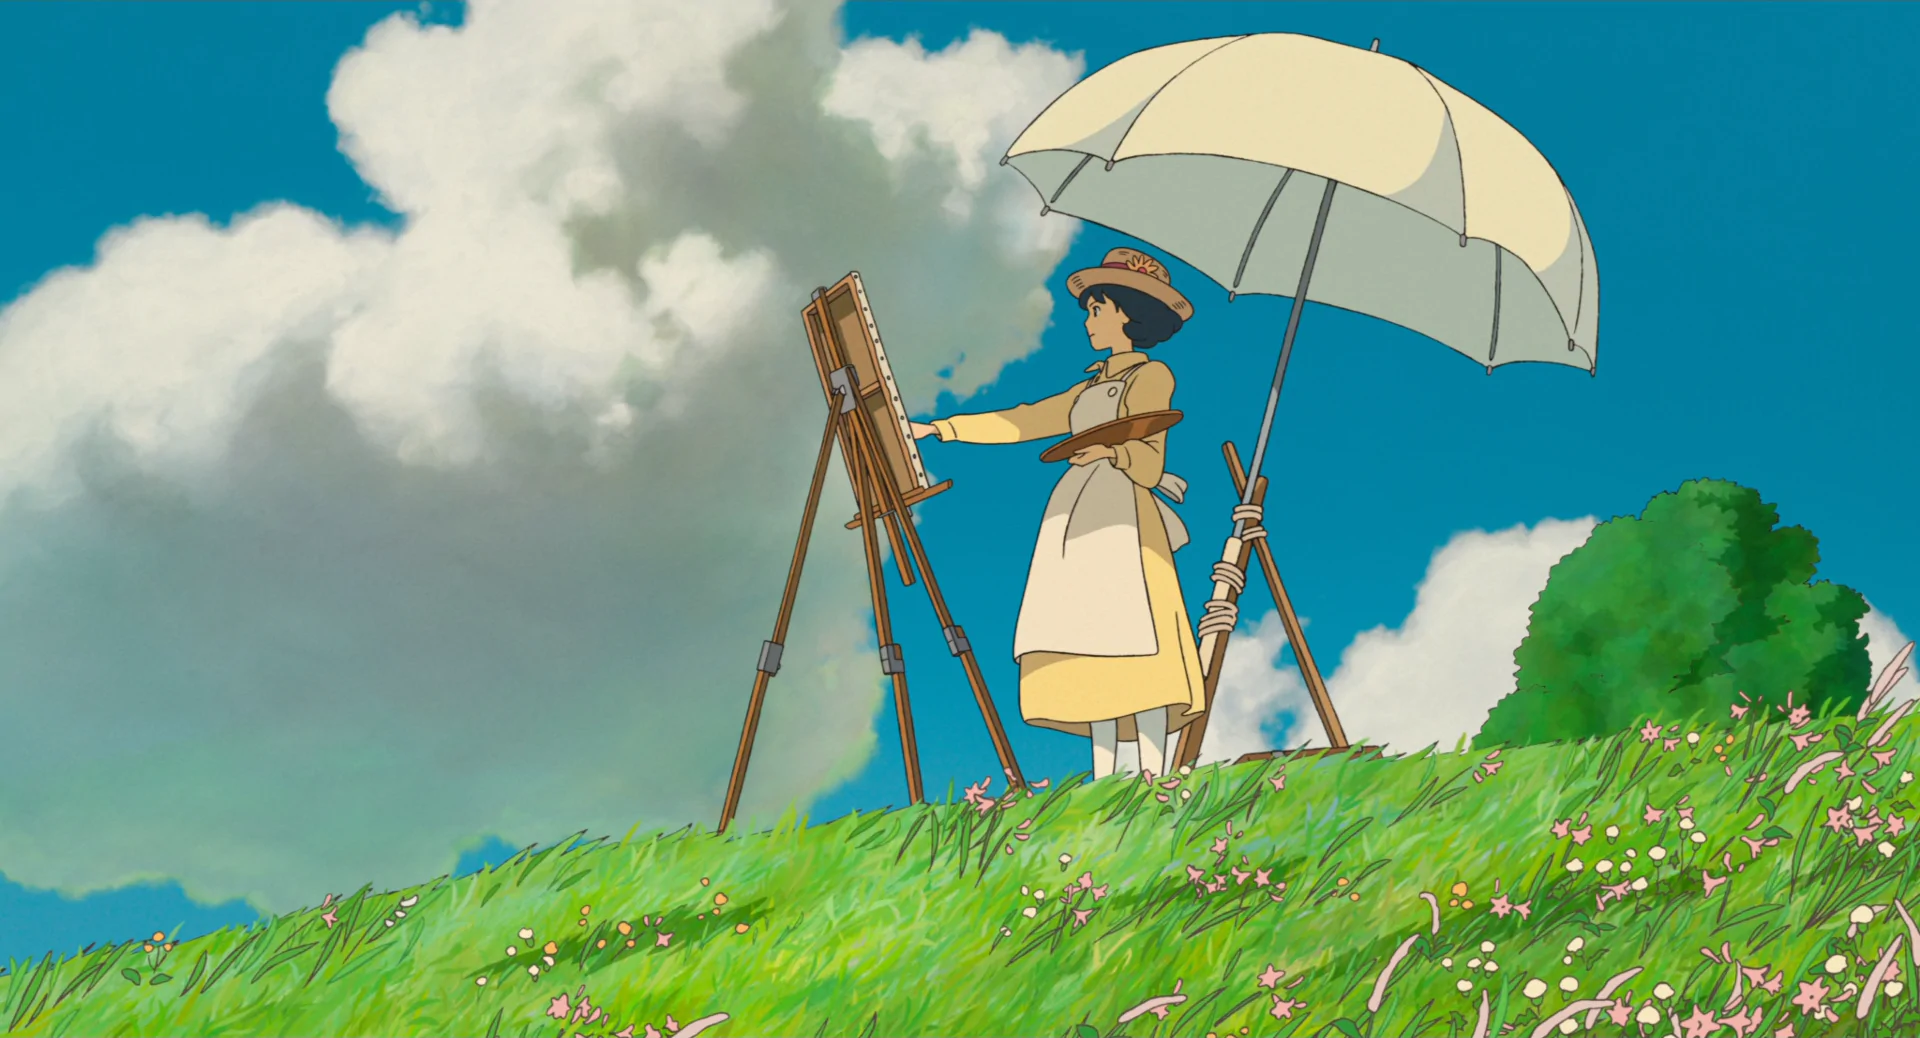 Principessa Mononoke, l'omaggio di Milo Manara a Hayao Miyazaki [Foto]